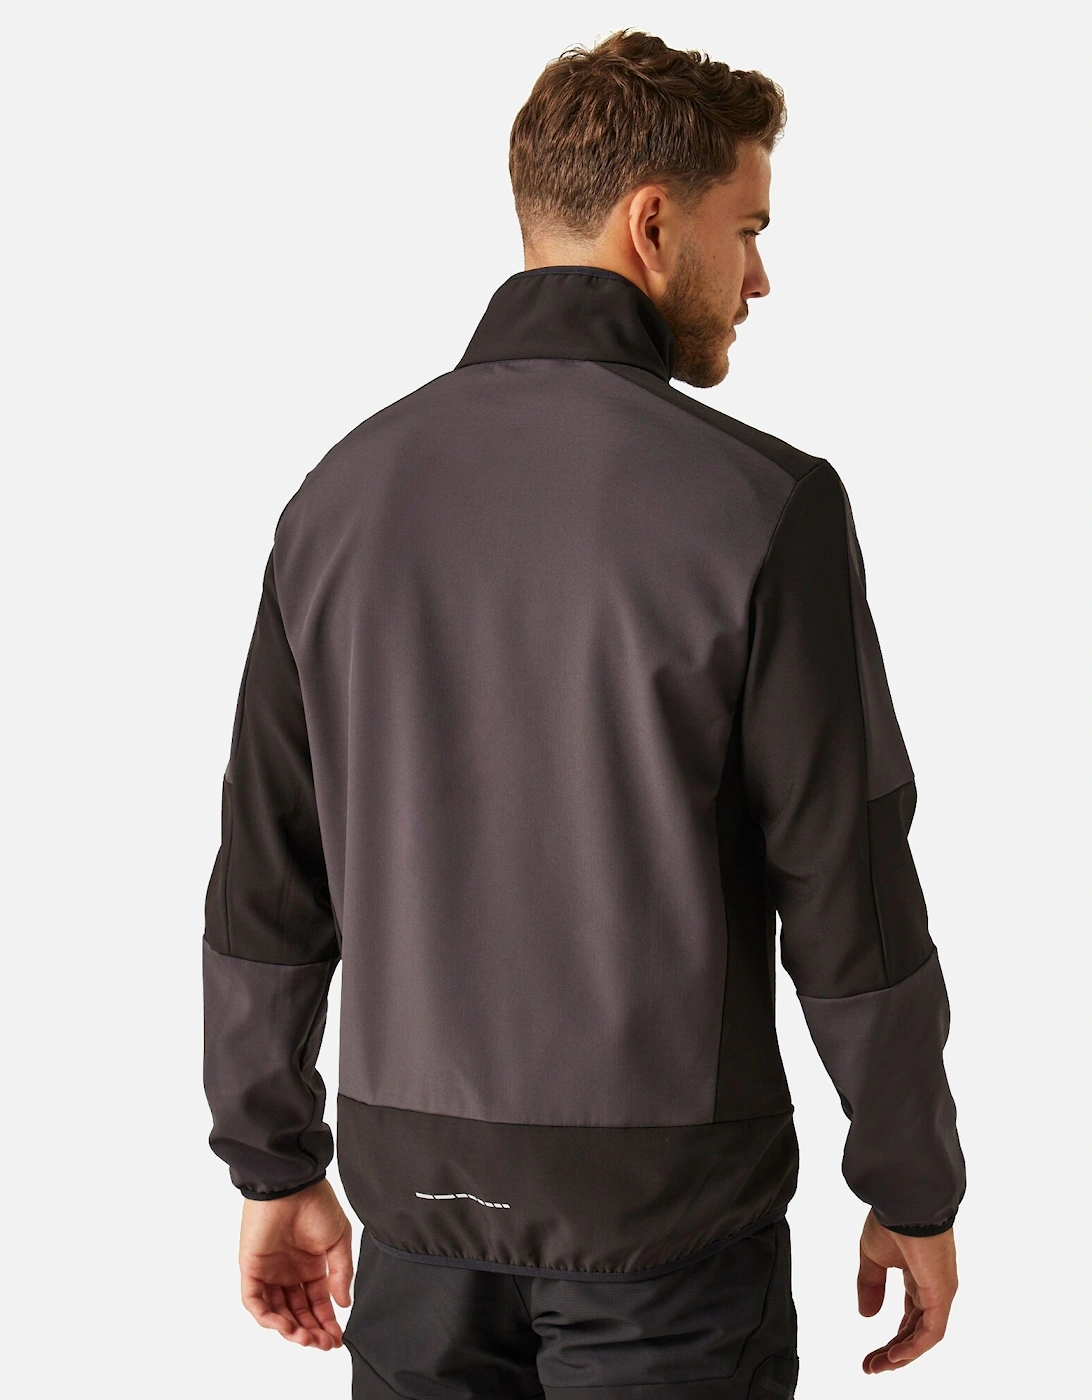 Unisex Adult E-Volve 2 Layer Soft Shell Jacket